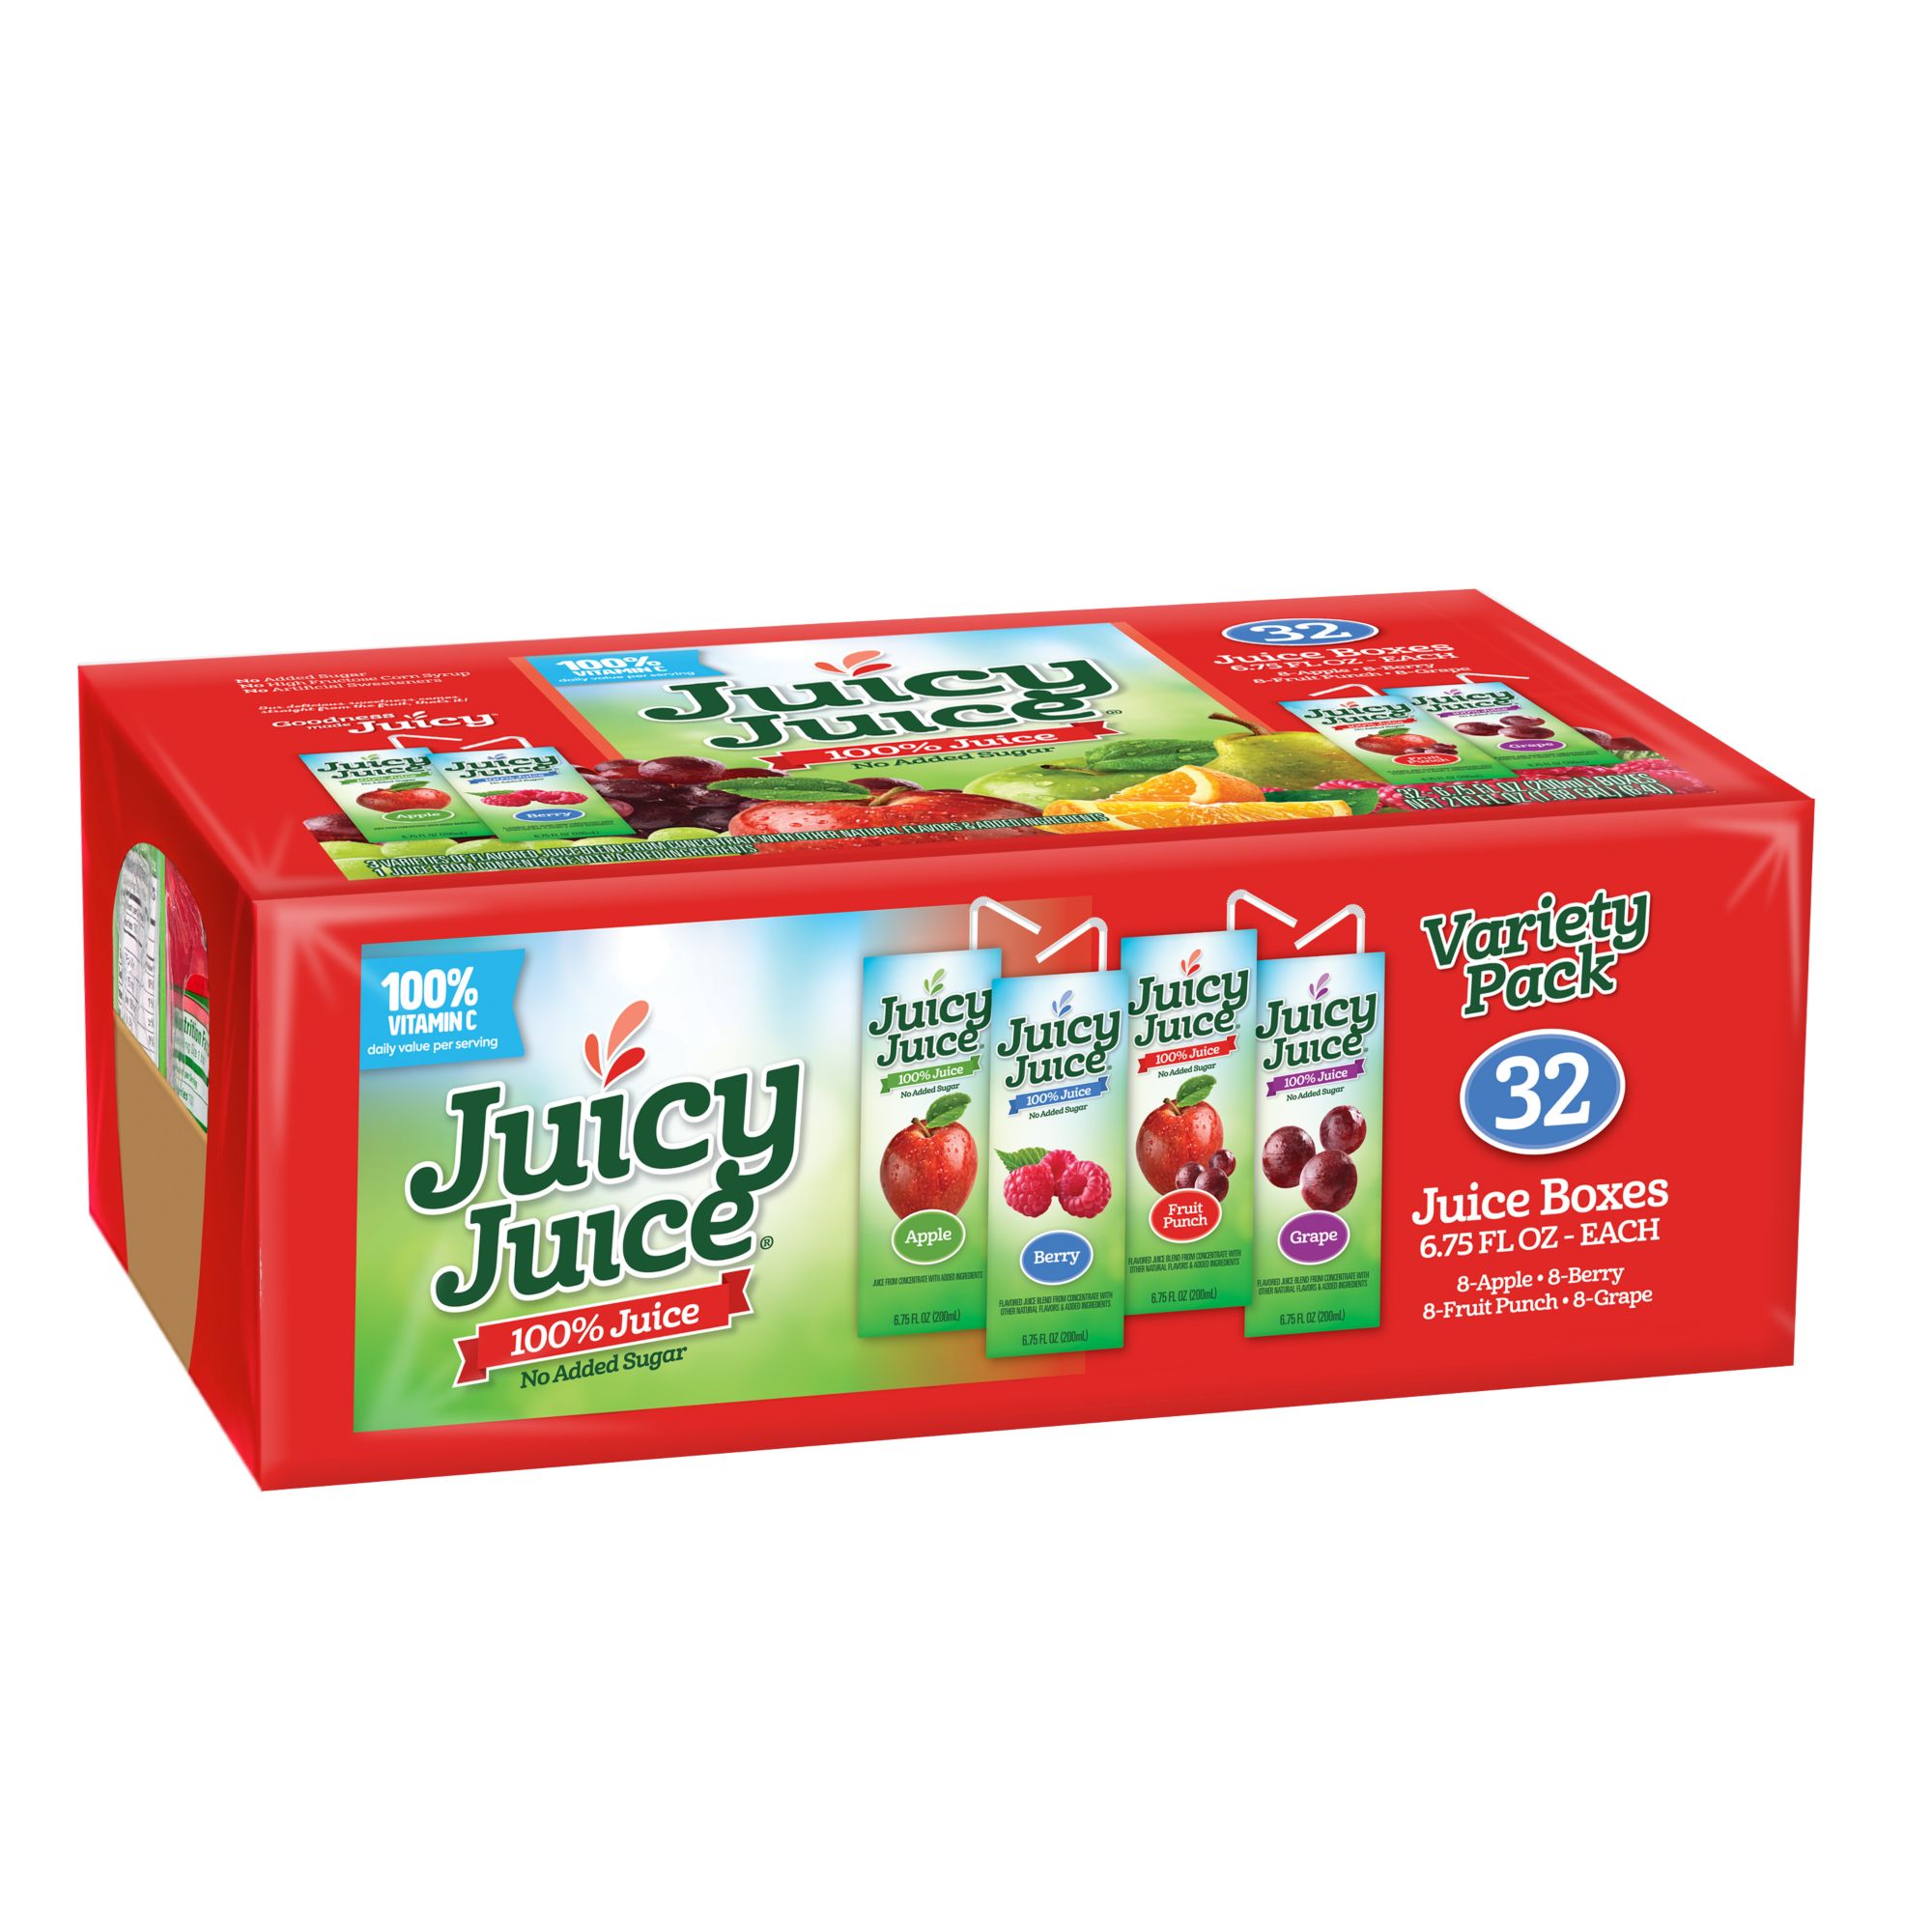 Juice in the Box 8oz